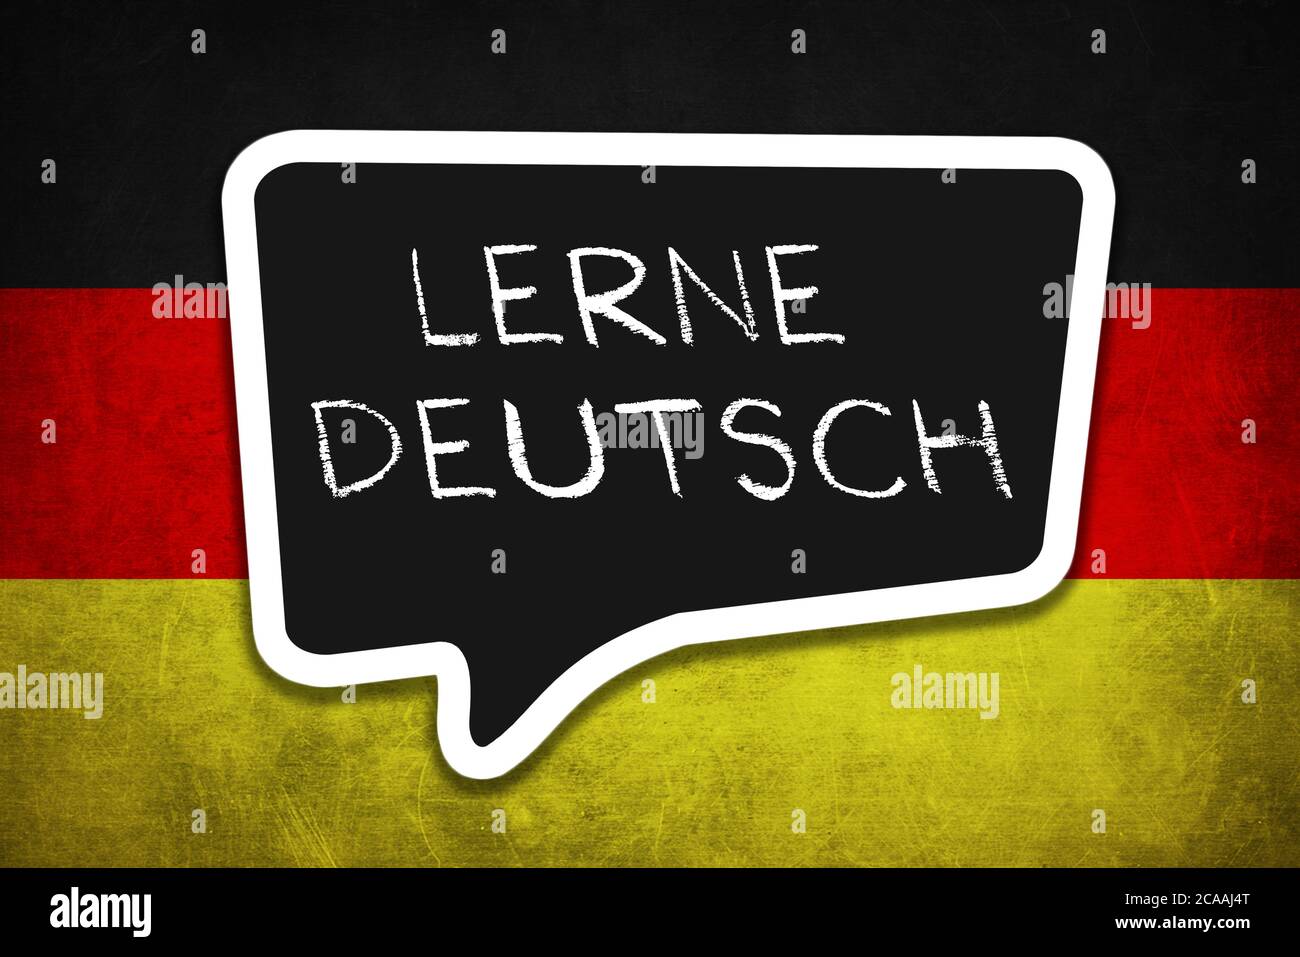 Lerne Deutsch - langue allemande Banque D'Images